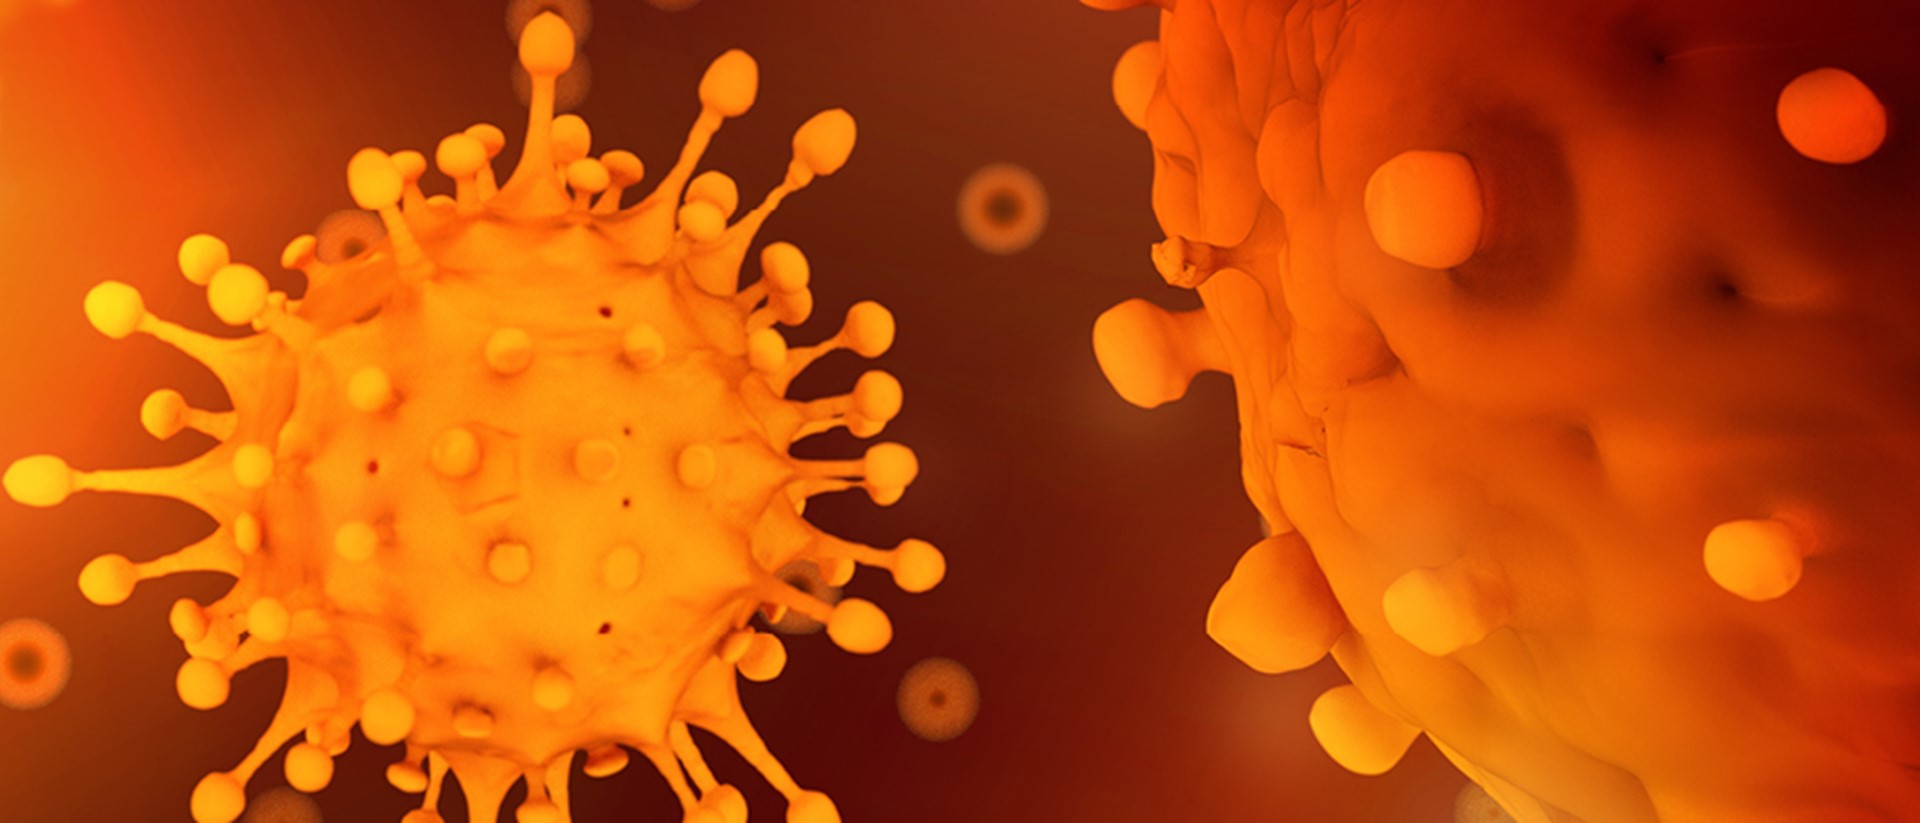 Image of orange viruses on a dark orange background